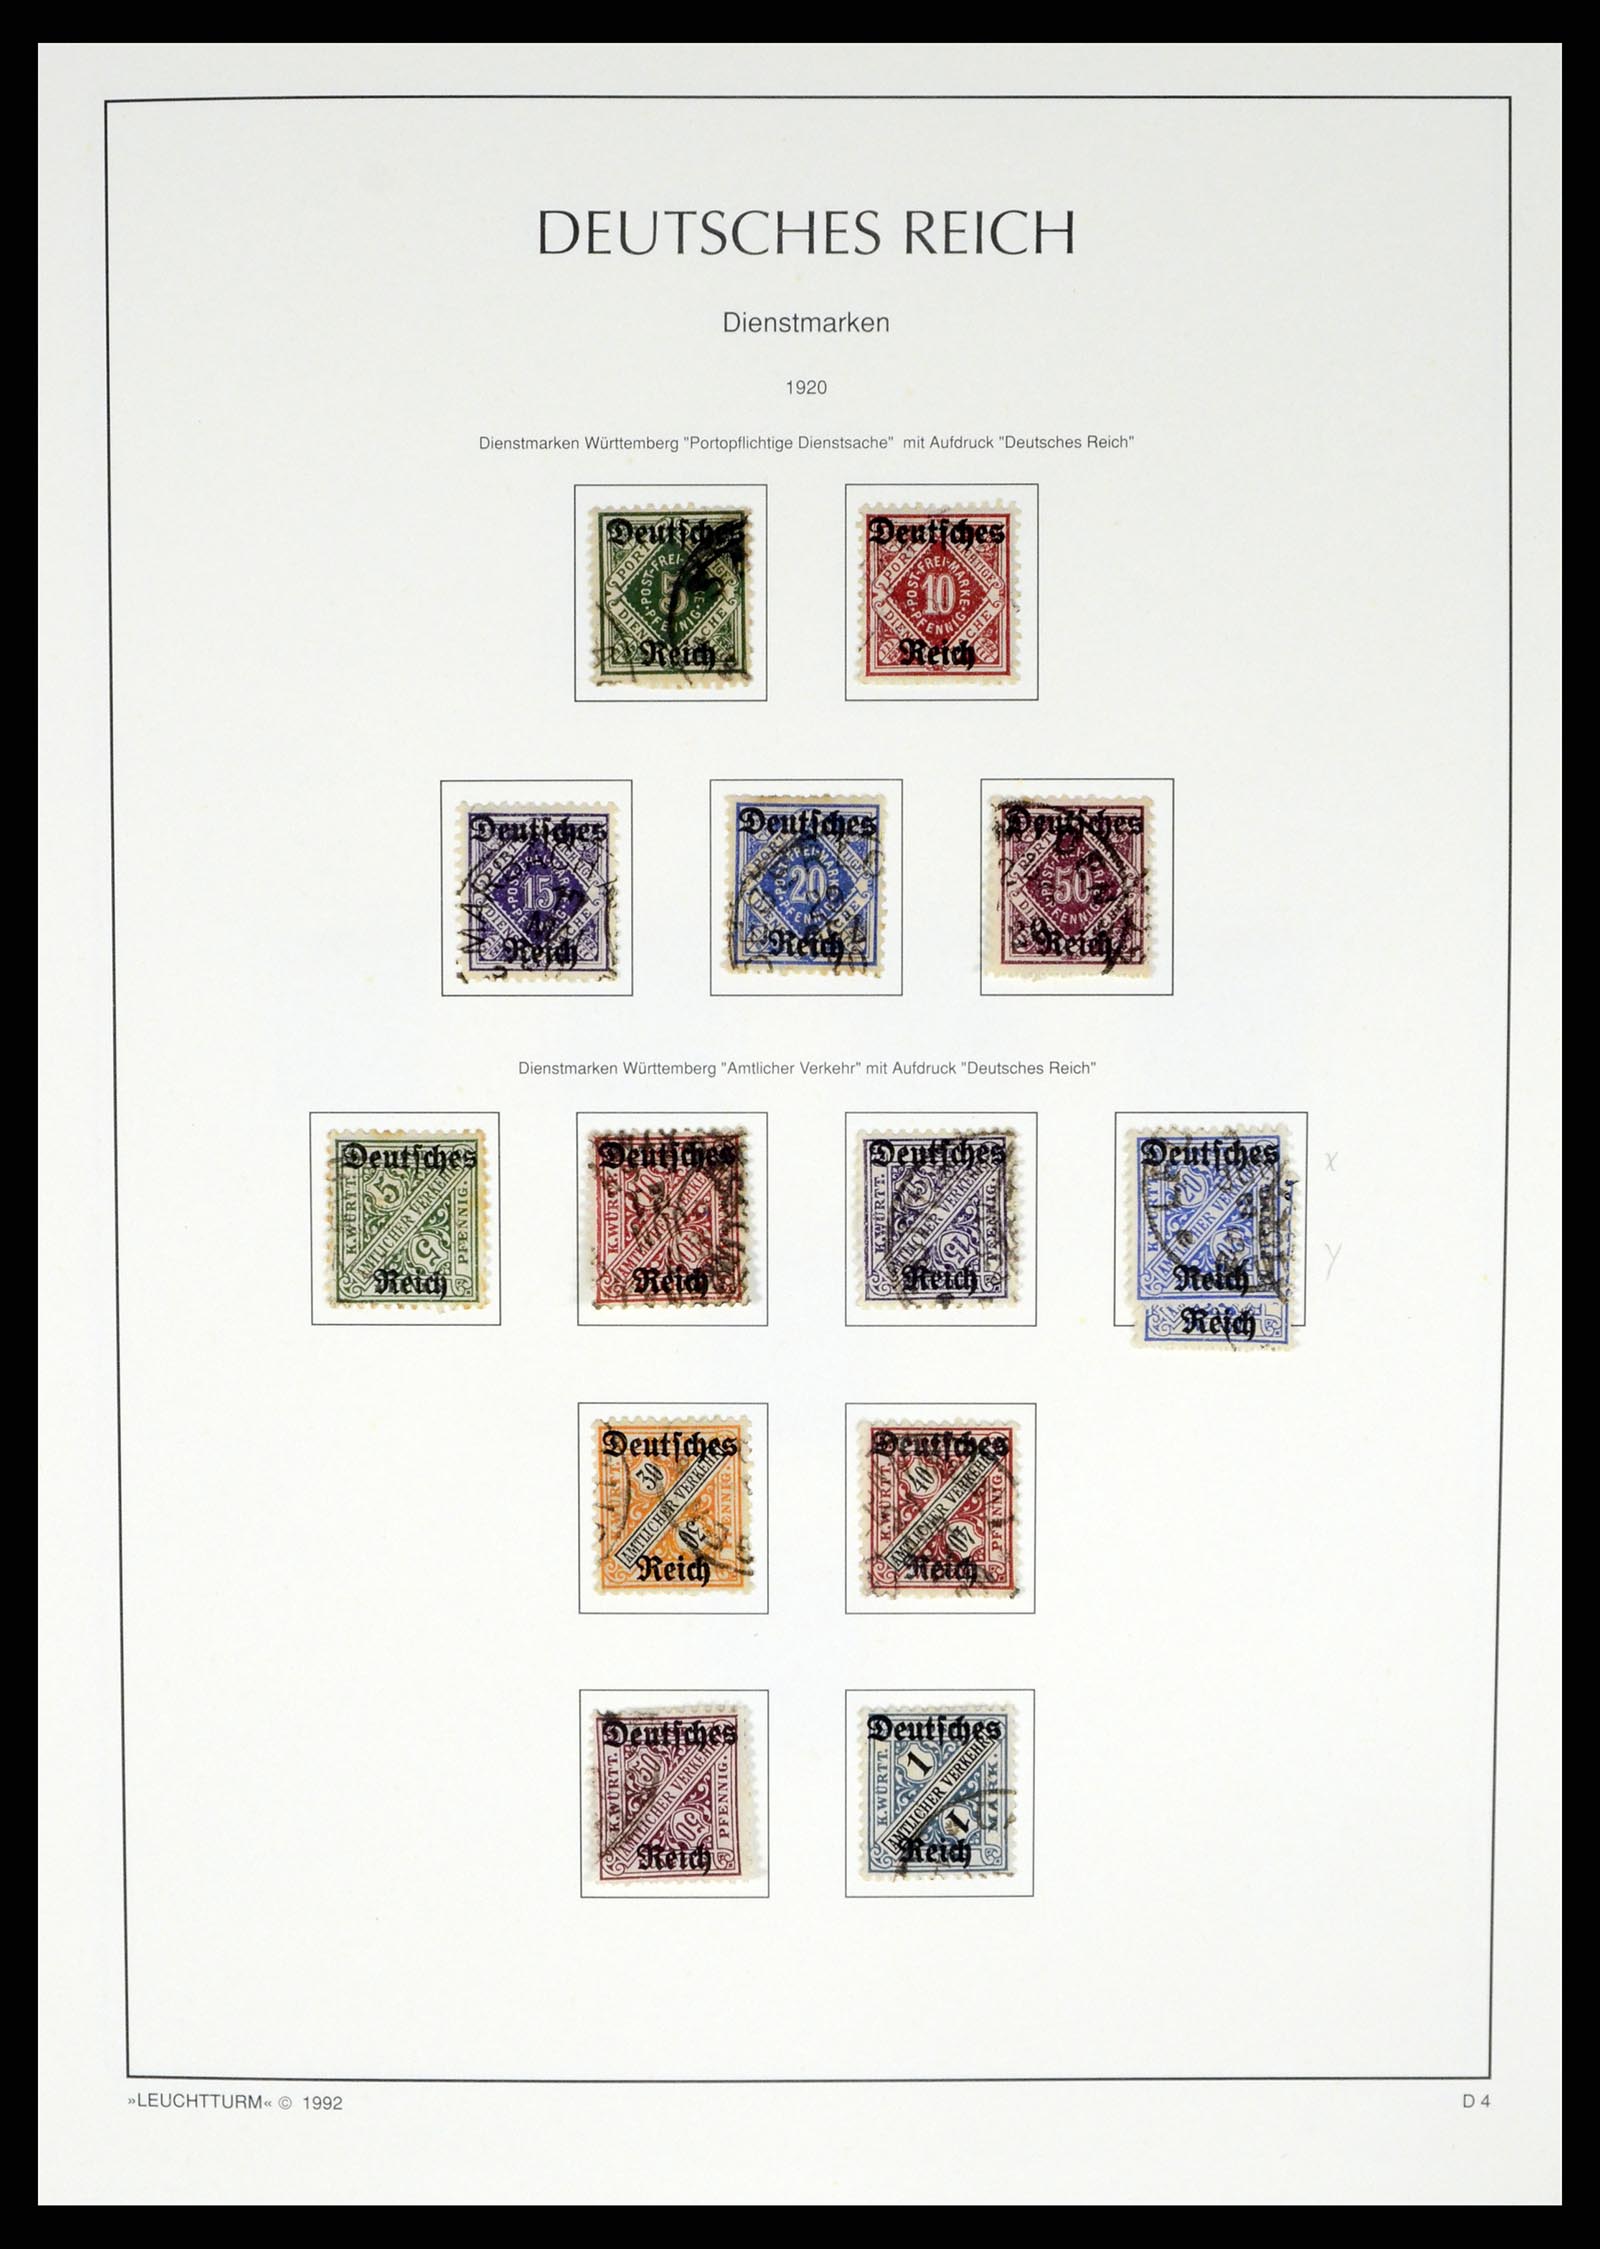 37497 057 - Stamp collection 37497 German Reich 1872-1945.